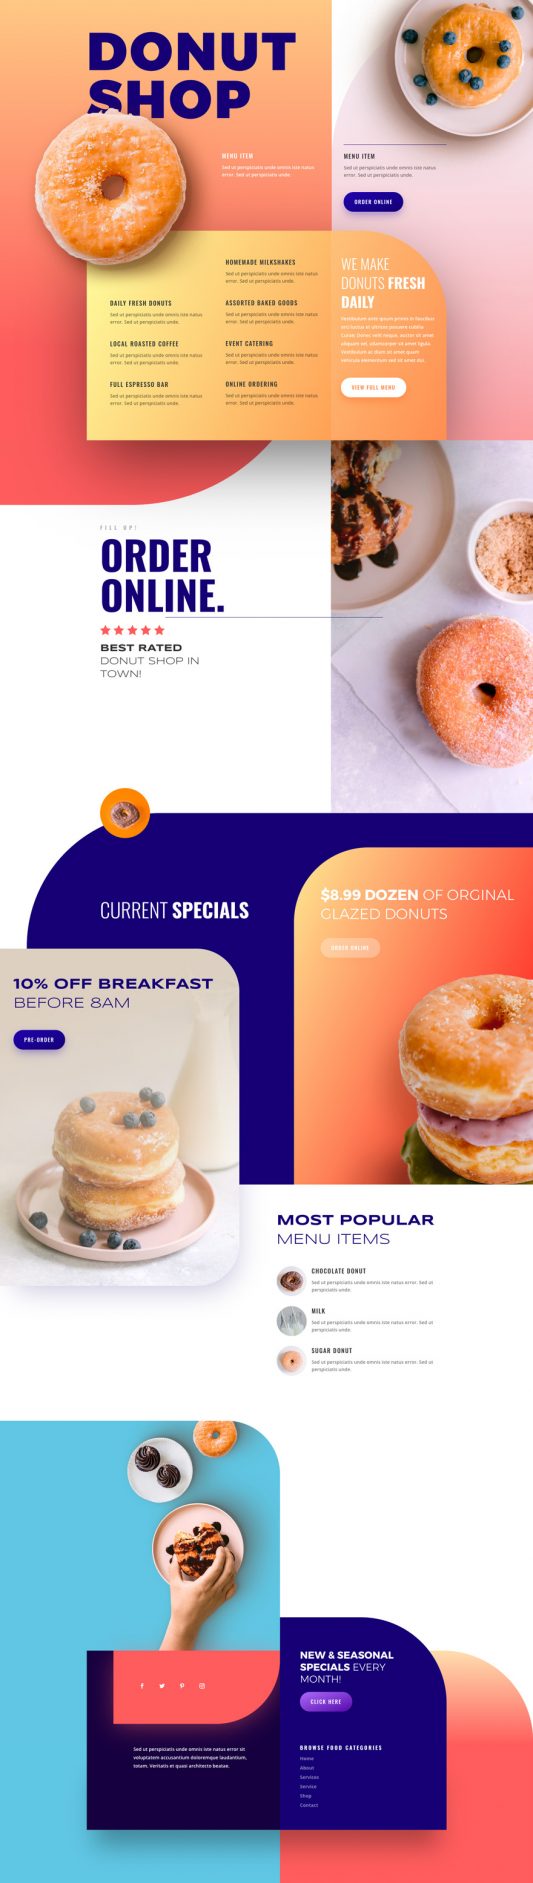 Donut Shop Landing Page